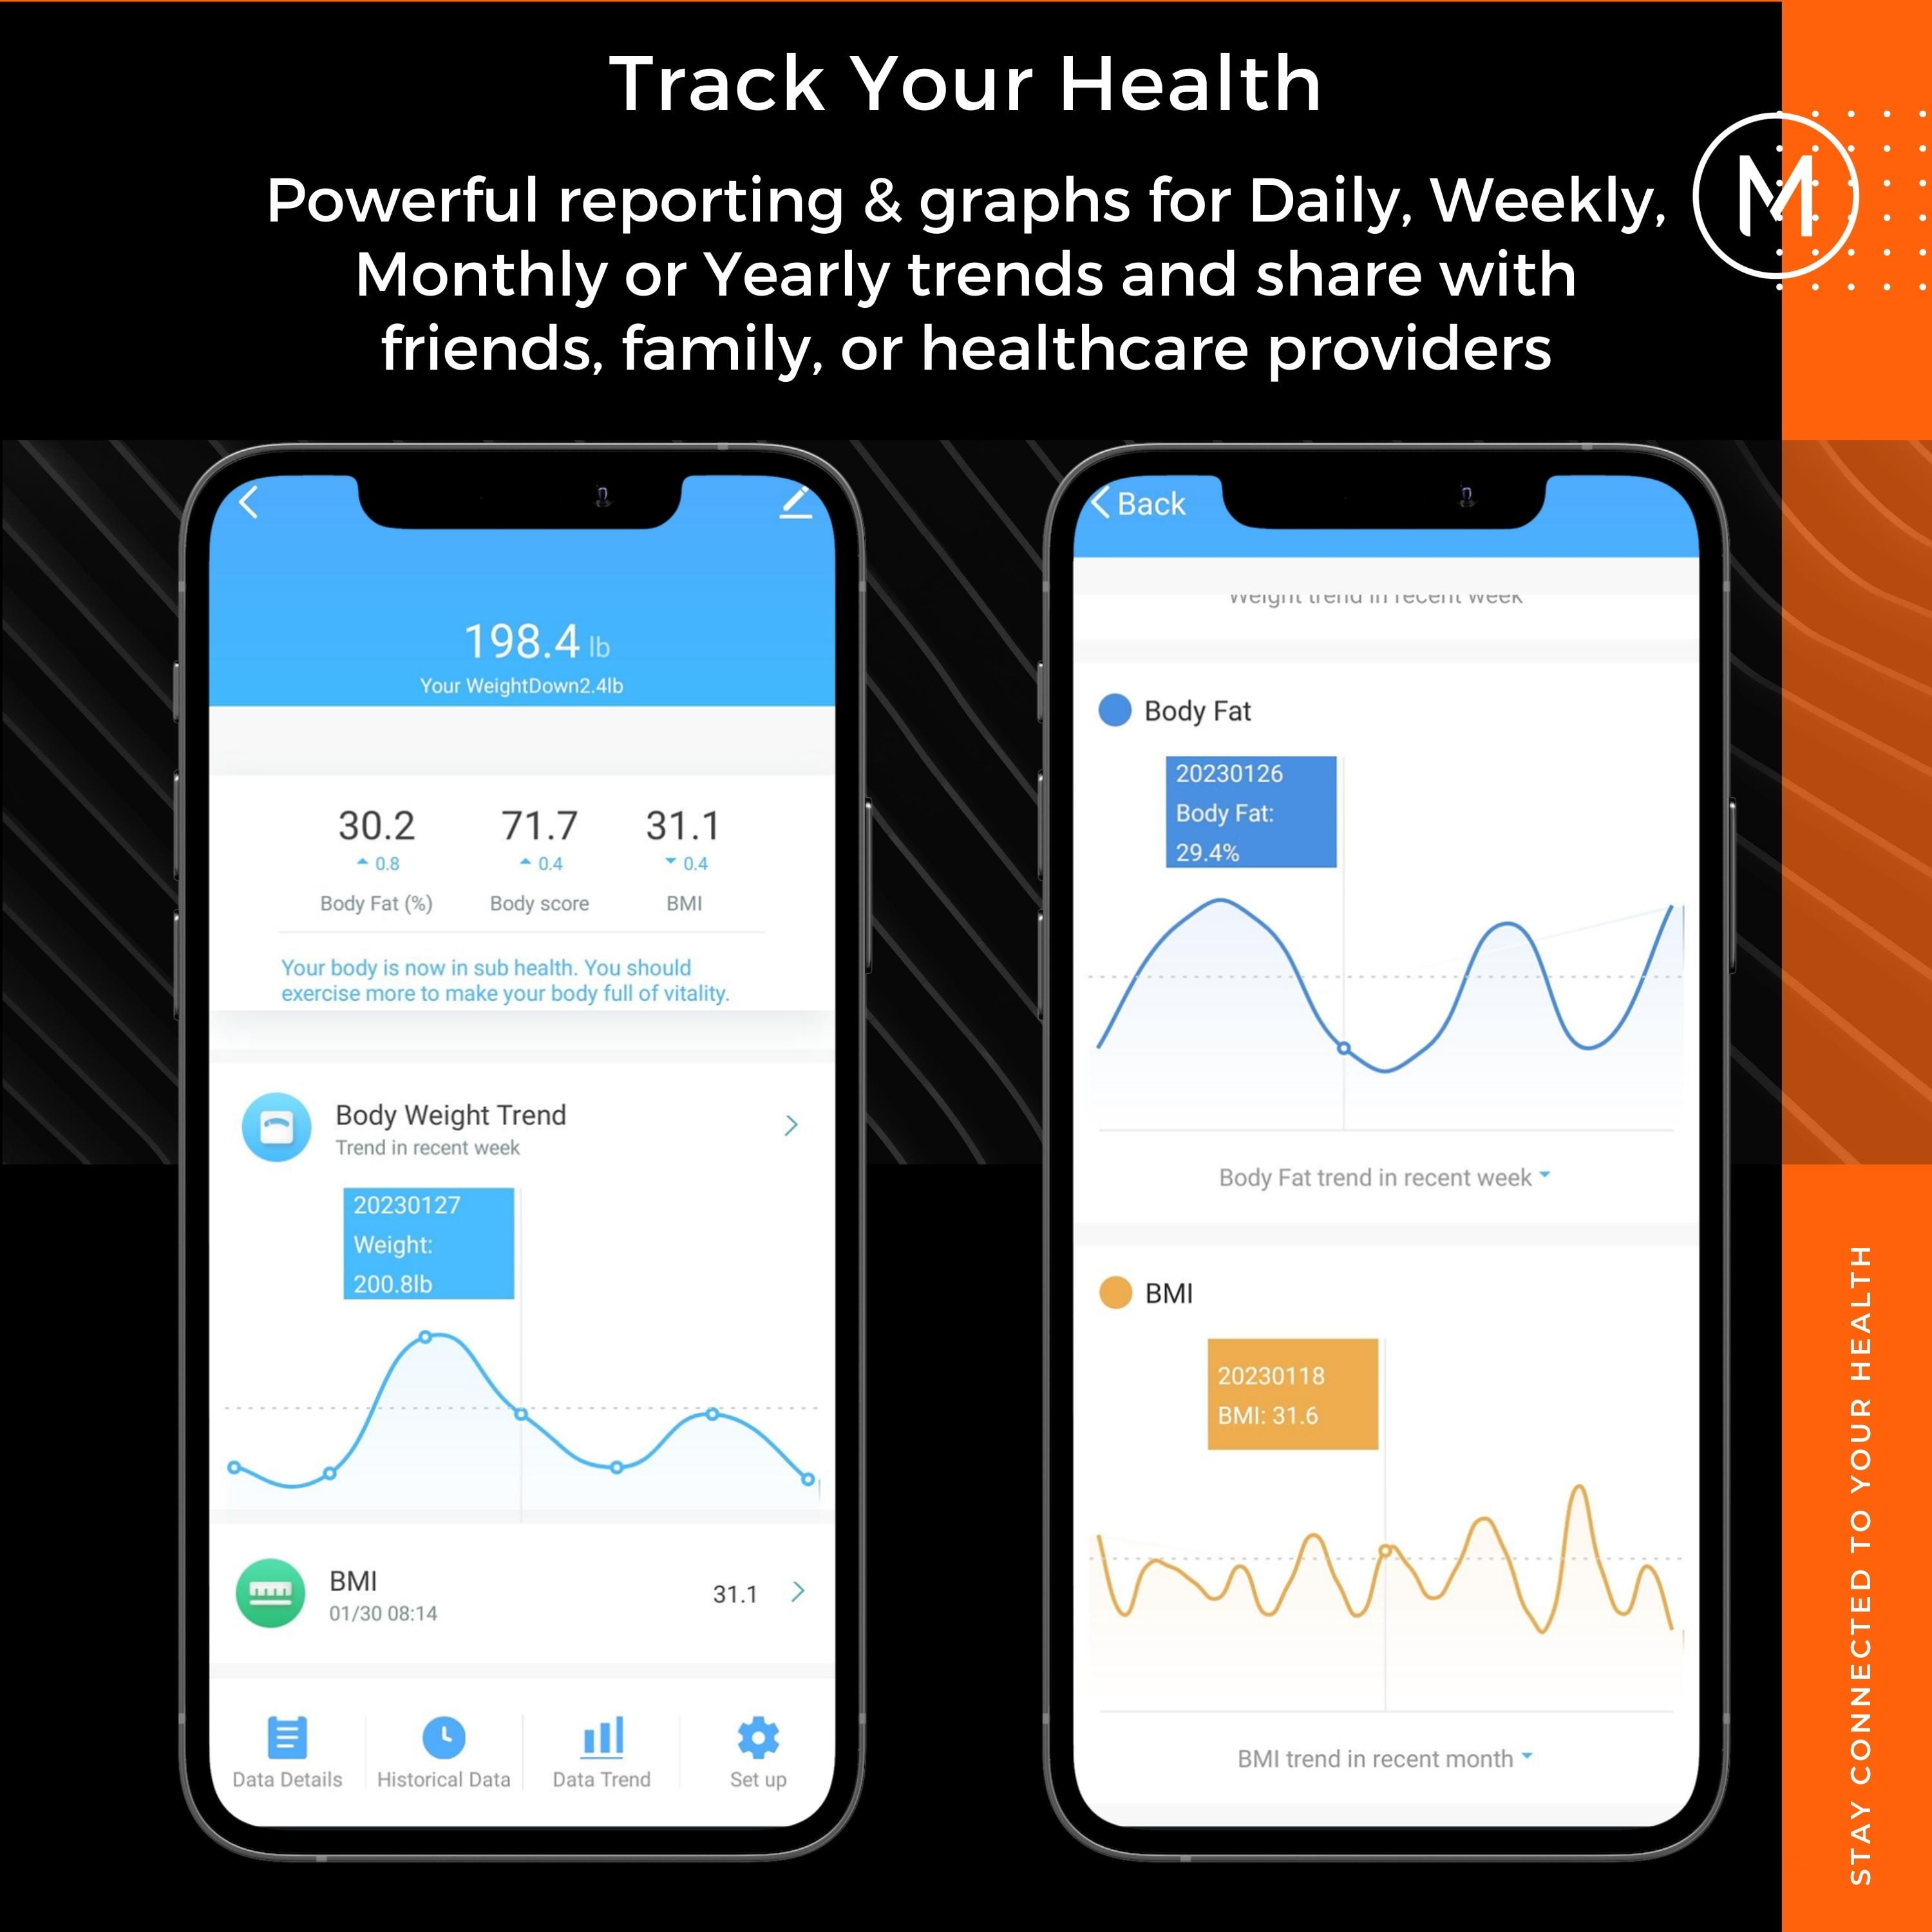 MOBI Smart Digital Wifi Body Weight Scale, Health Analysis with Smartphone  App